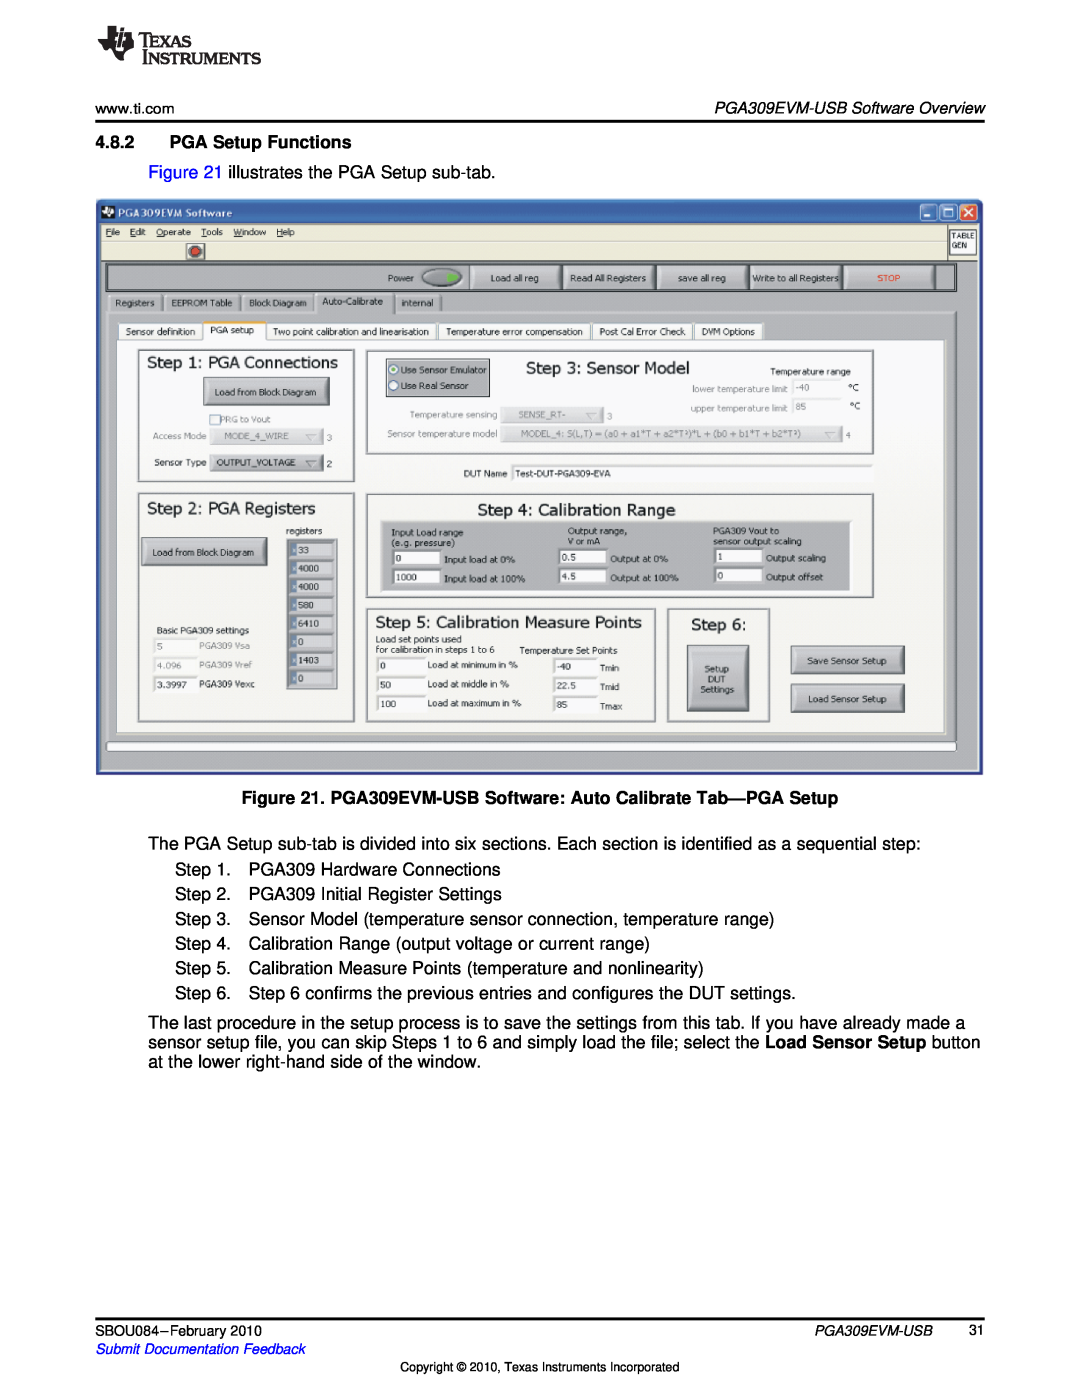 Texas Instruments manual PGA Setup Functions, PGA309EVM-USB Software Auto Calibrate Tab-PGA Setup 